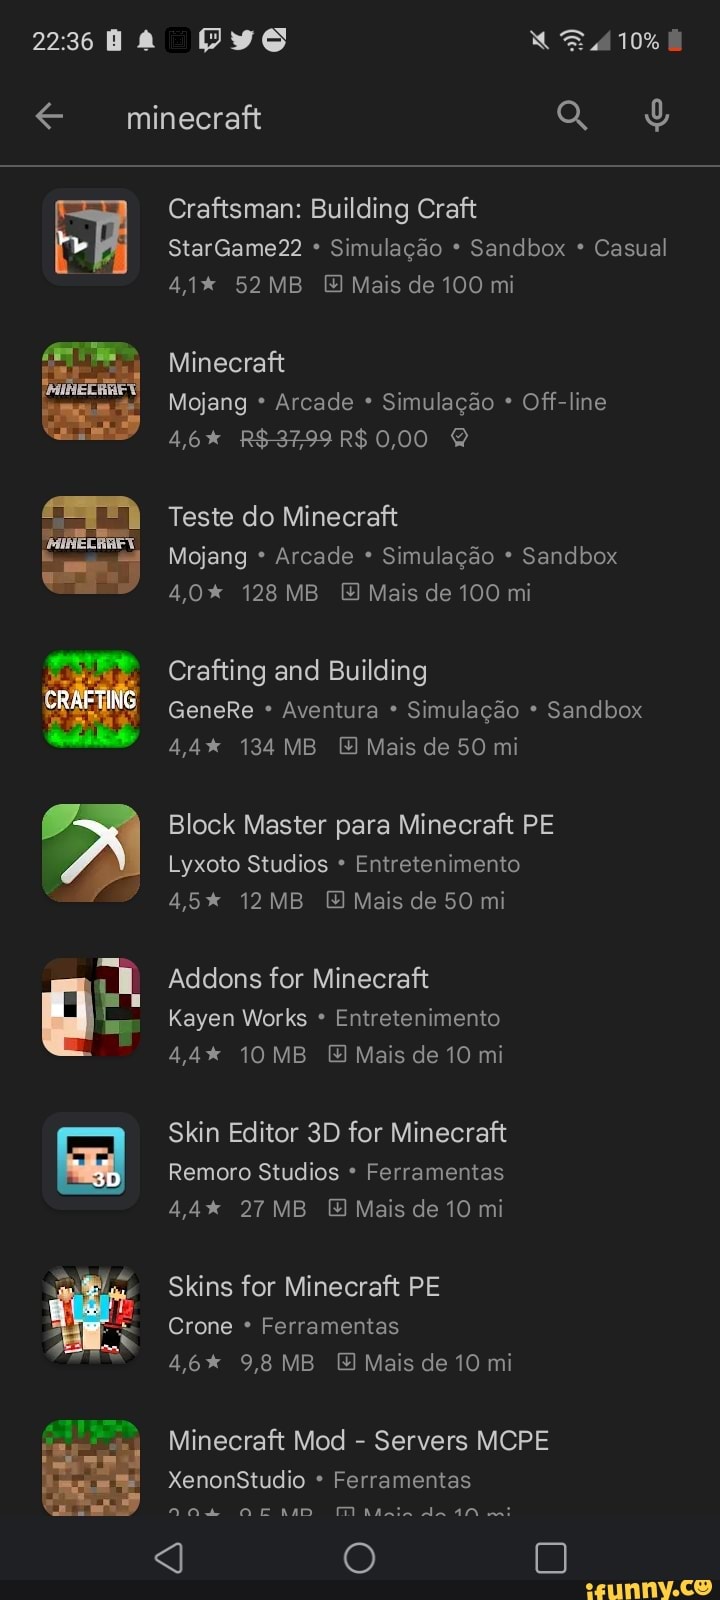 CORRAM, MINECRAFT DE GRAÇA 2240 Minecraft ha, Mojang Compras no app 4,6% I 4